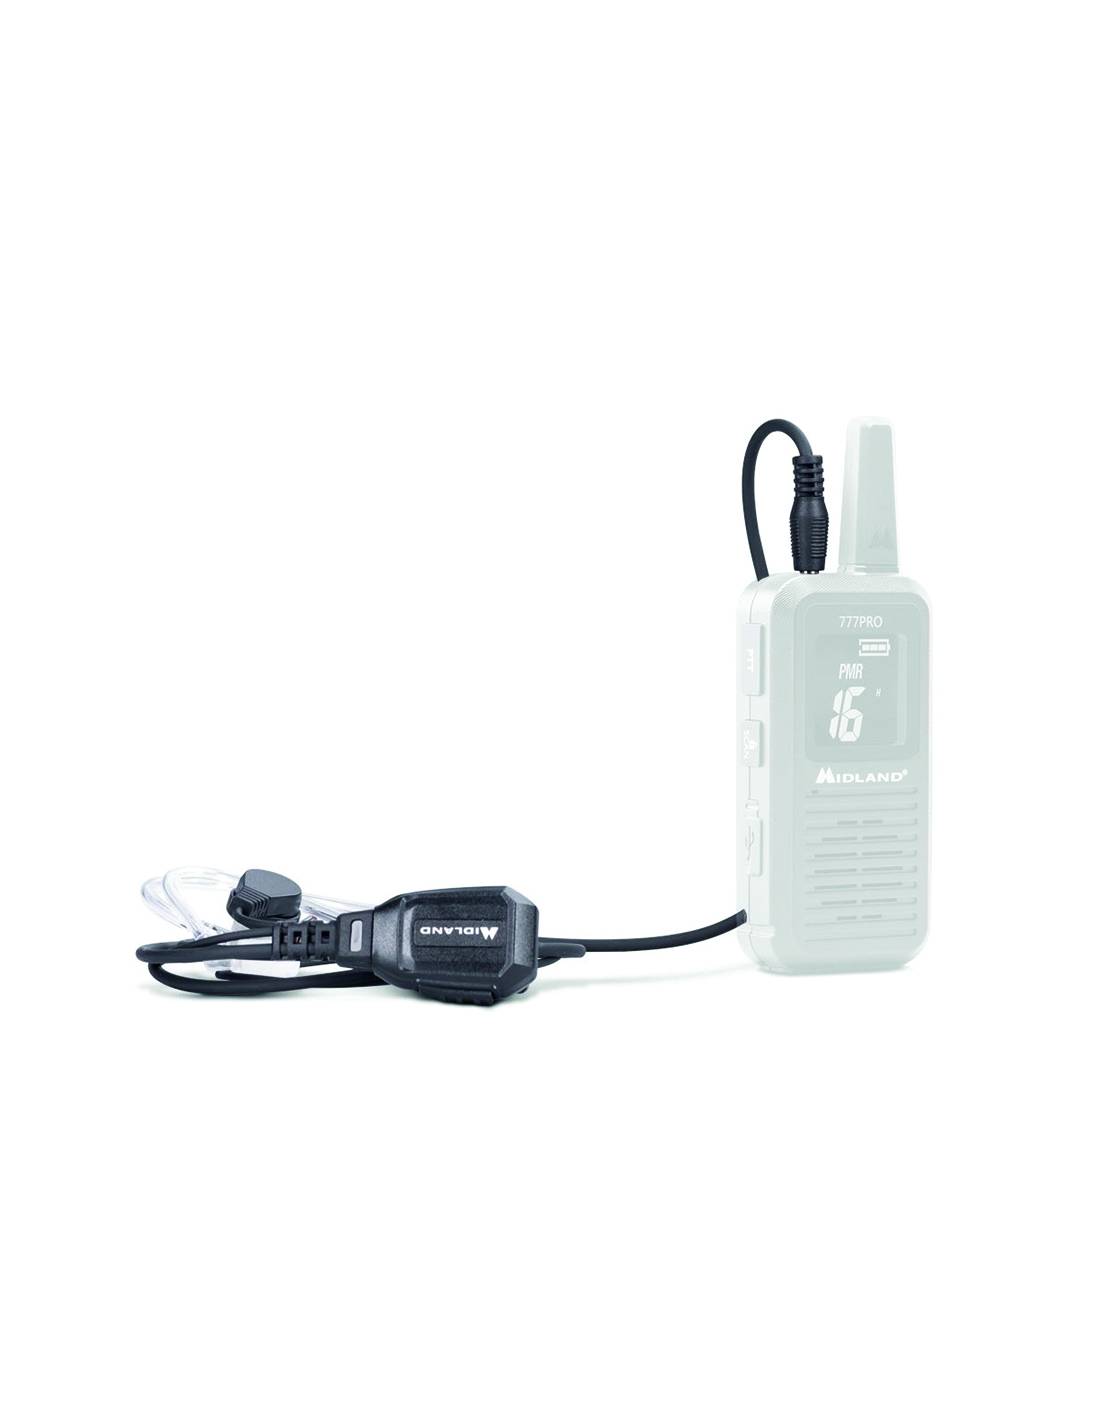 Microfone Headset Ma21 Para Rádio 777 Pro Midland - negro - 